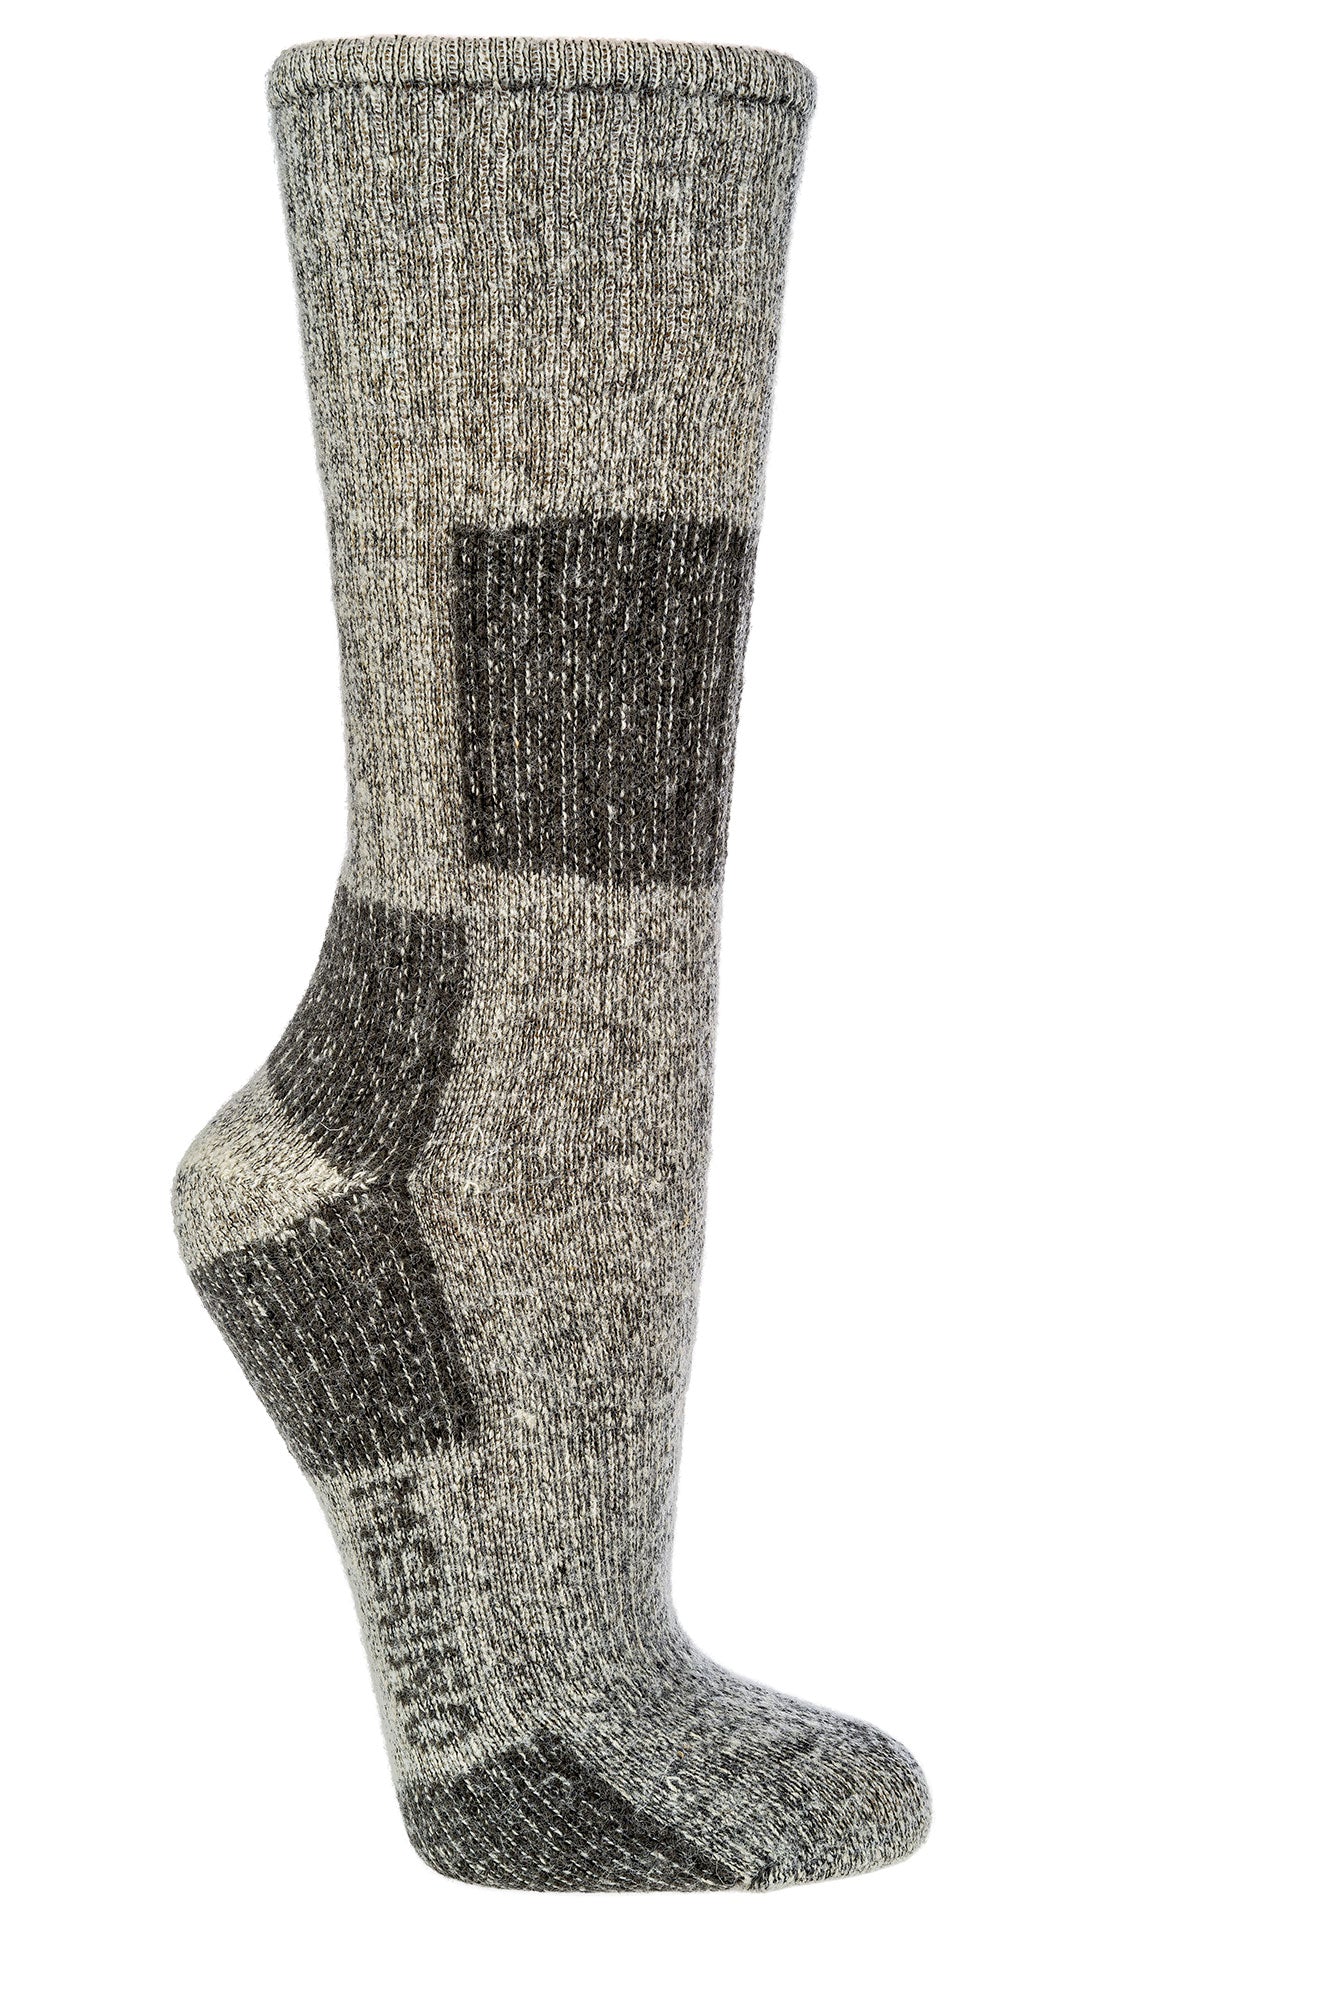 RGC Socks Hiking 85% Merino Wool Socks By The Mountain